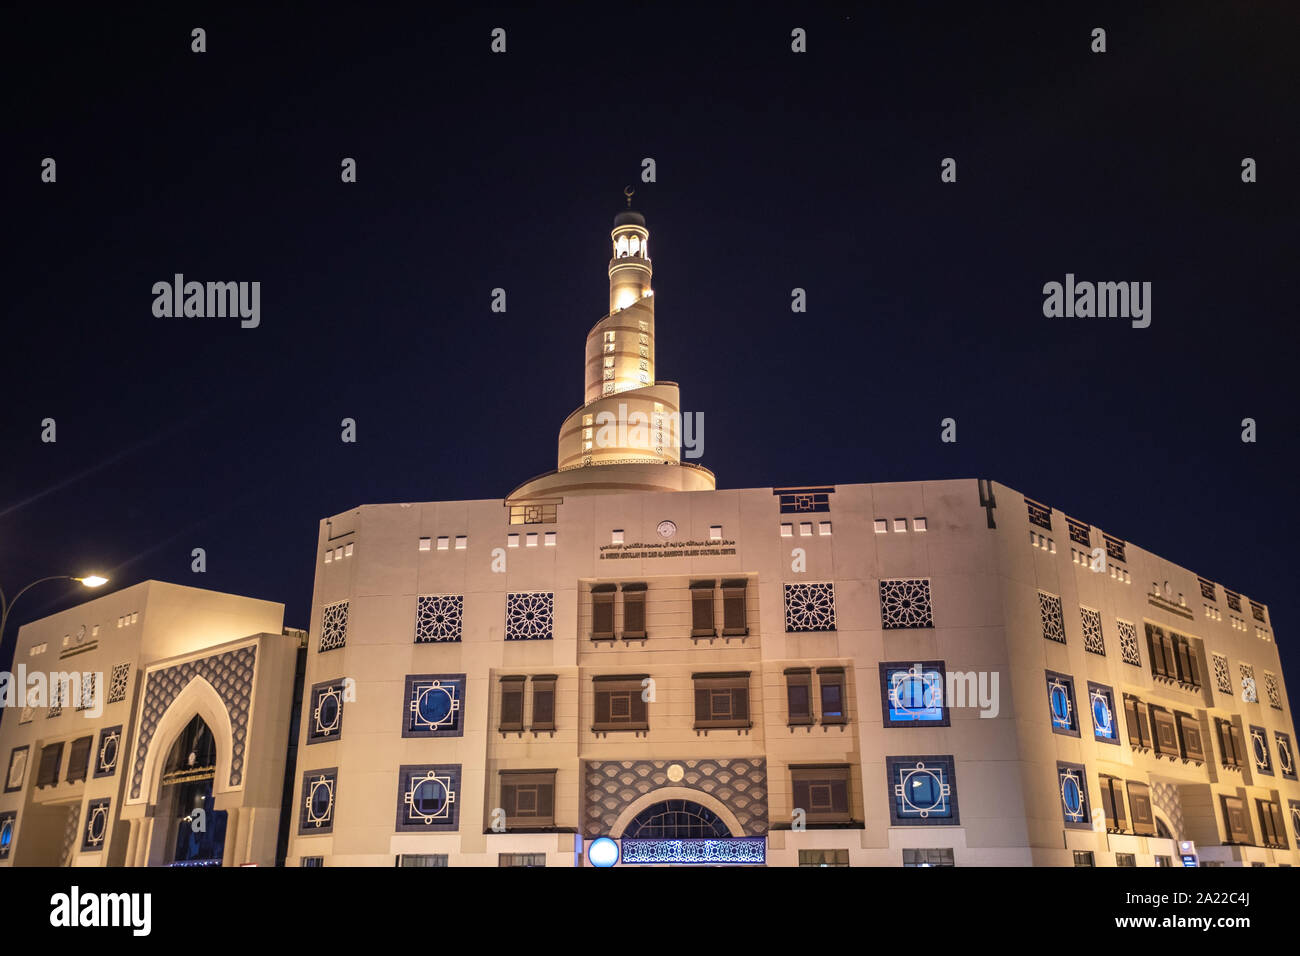 Construcción de Abdullah bin Zaid Al Mahmoud o Centro Cultural Islámico en Doha, Qatar. Centro cultural islámico es uno de Landmark de Doha. Foto de stock